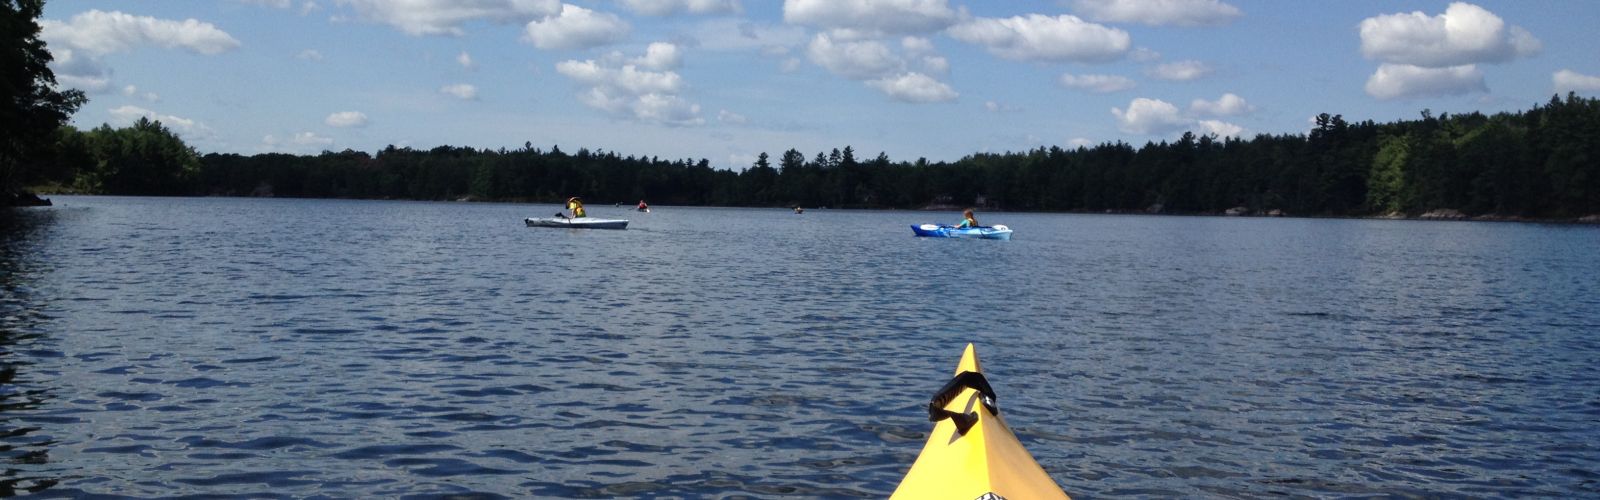 Summer kayaking, events